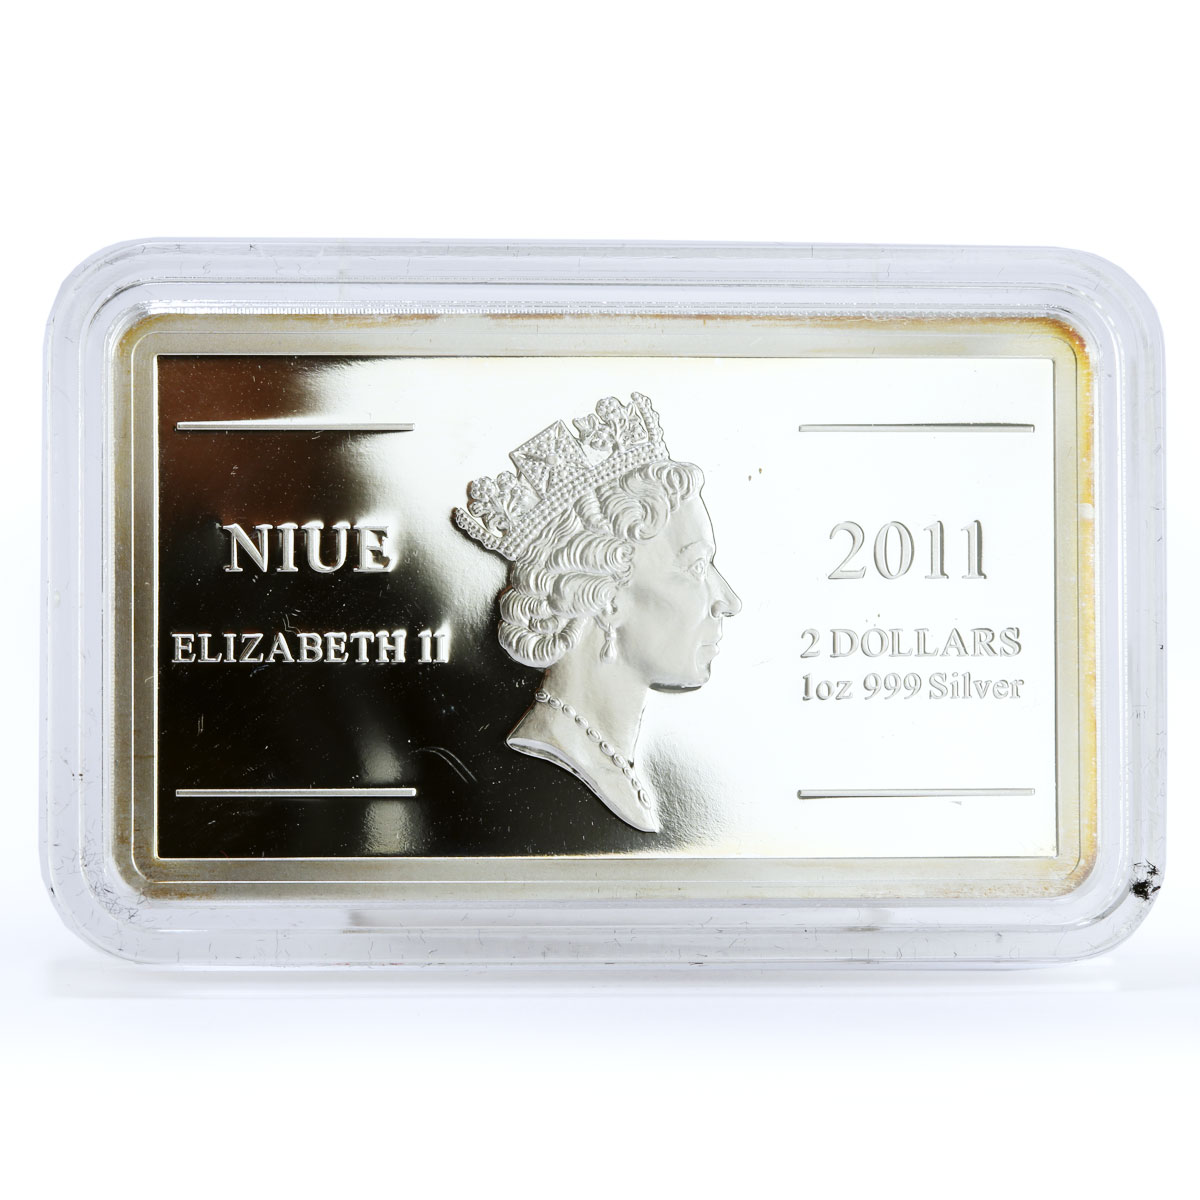 Niue 2 dollars Conquest Space First Man in Space Juri Gagarin silver coin 2011